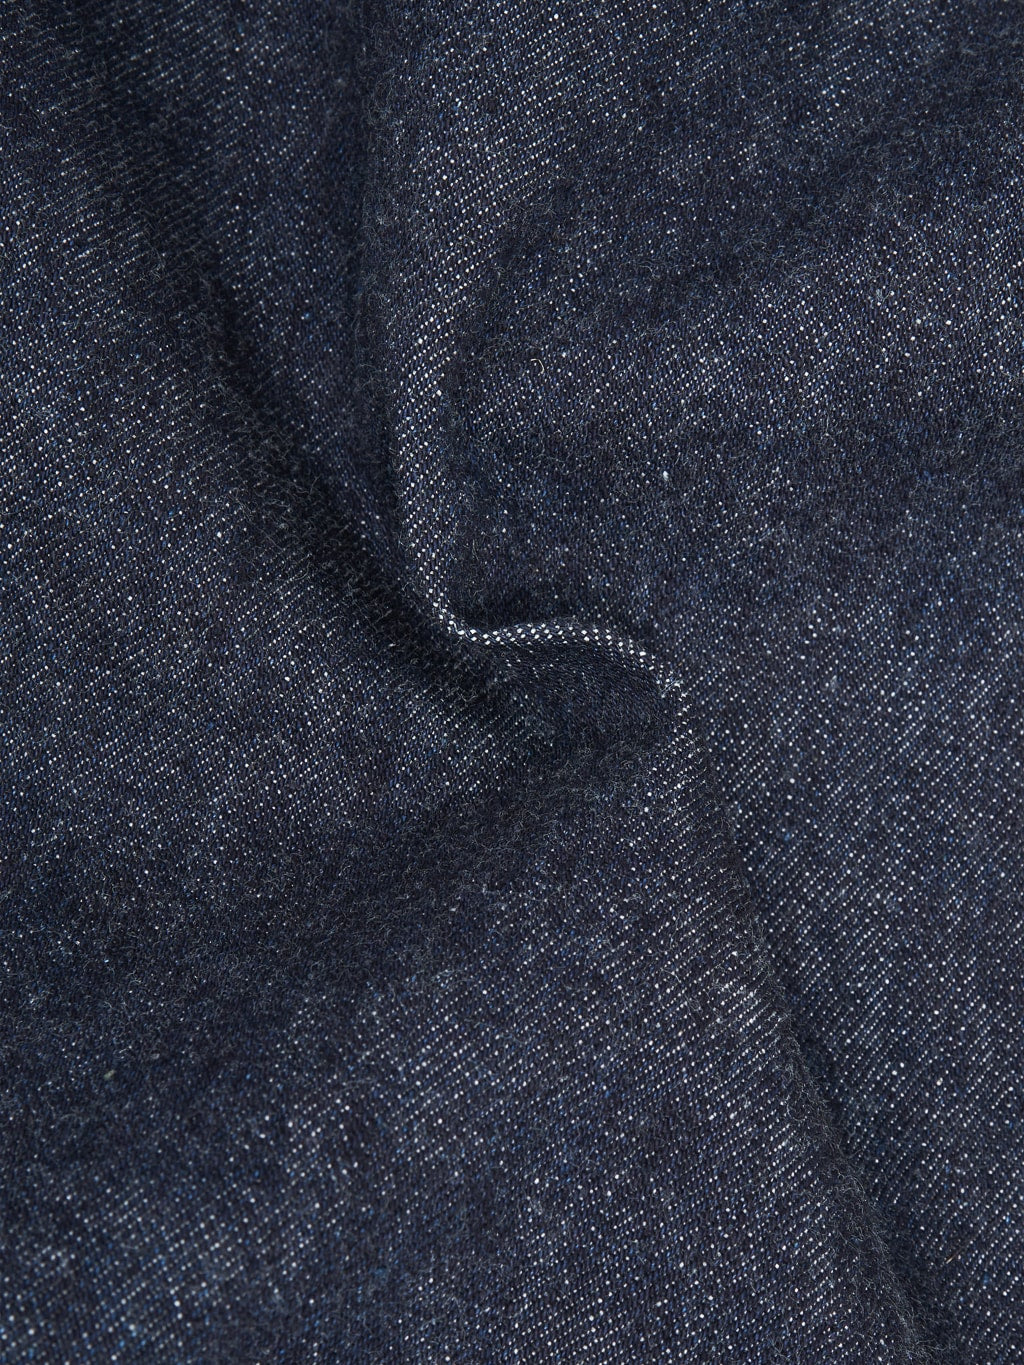 tcb s40s regular straight jeans cotton texture